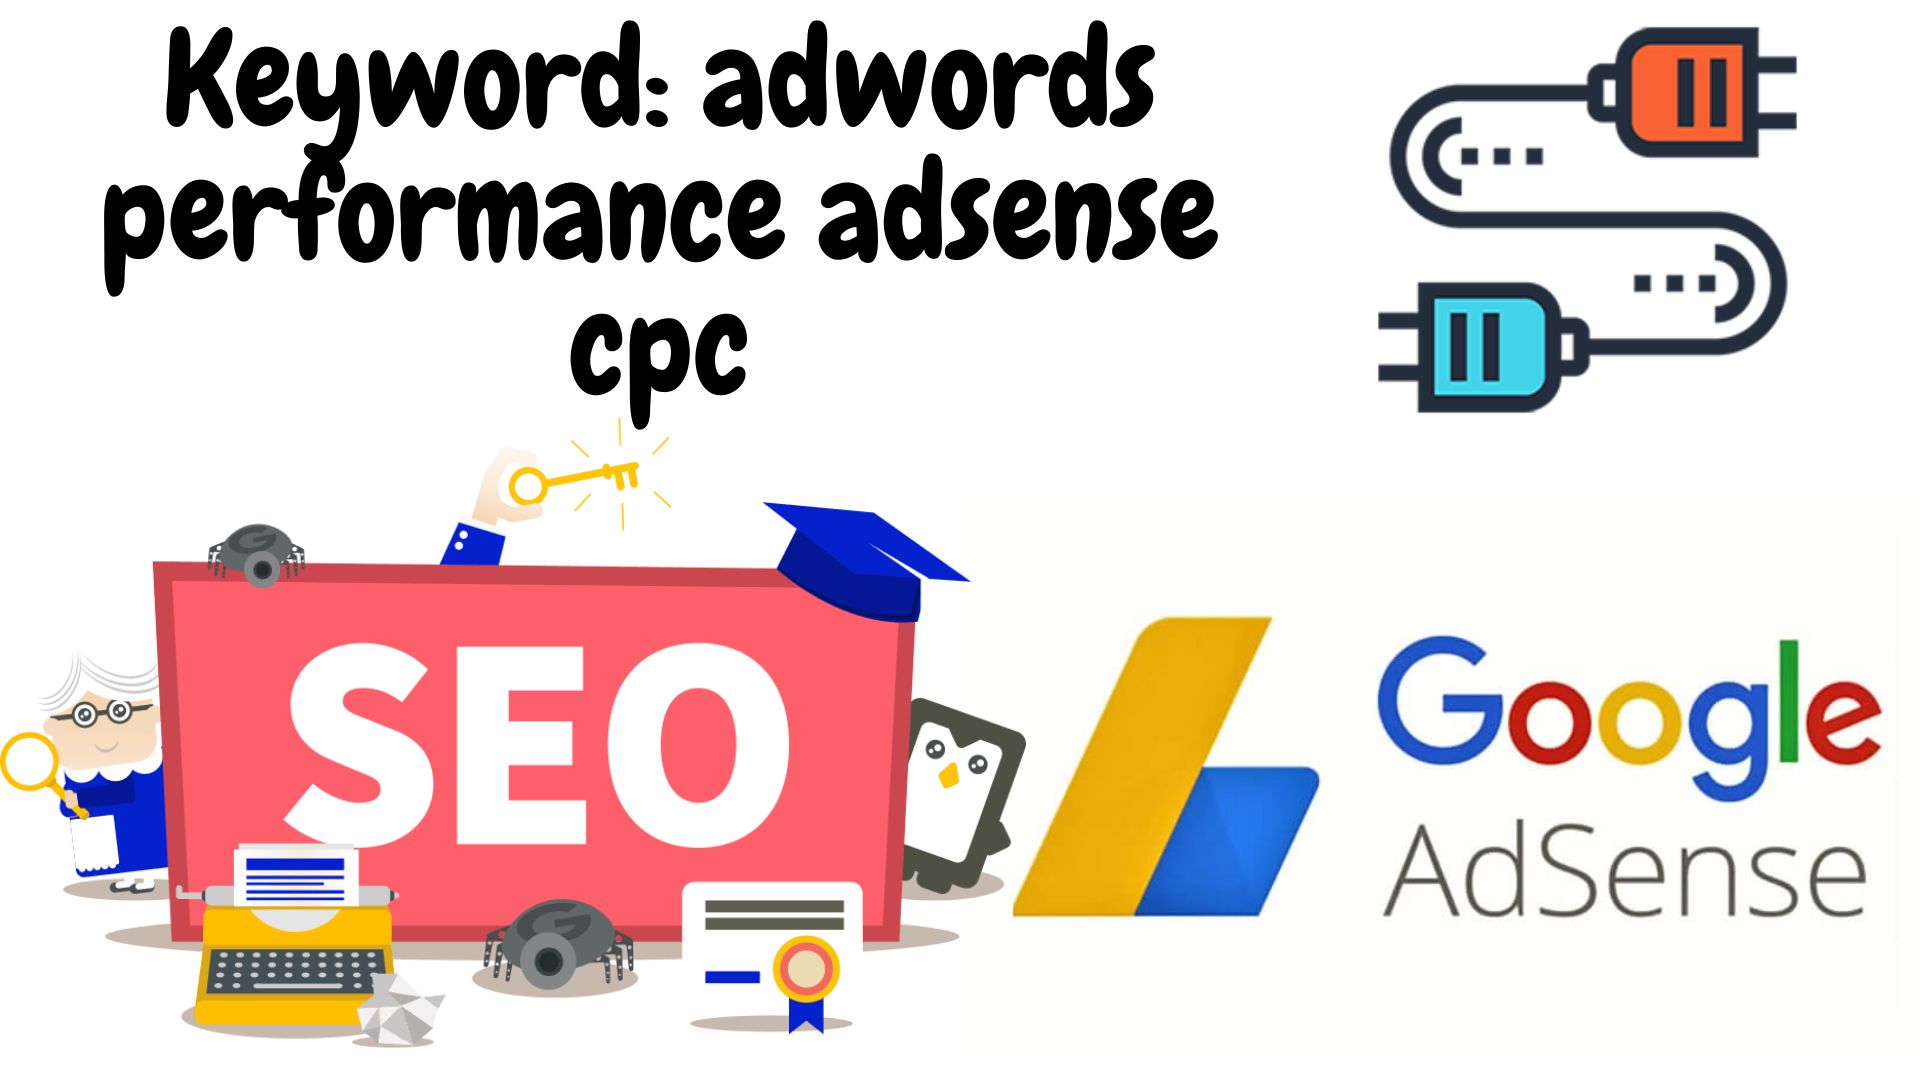 Keyword: adwords performance adsense cpc